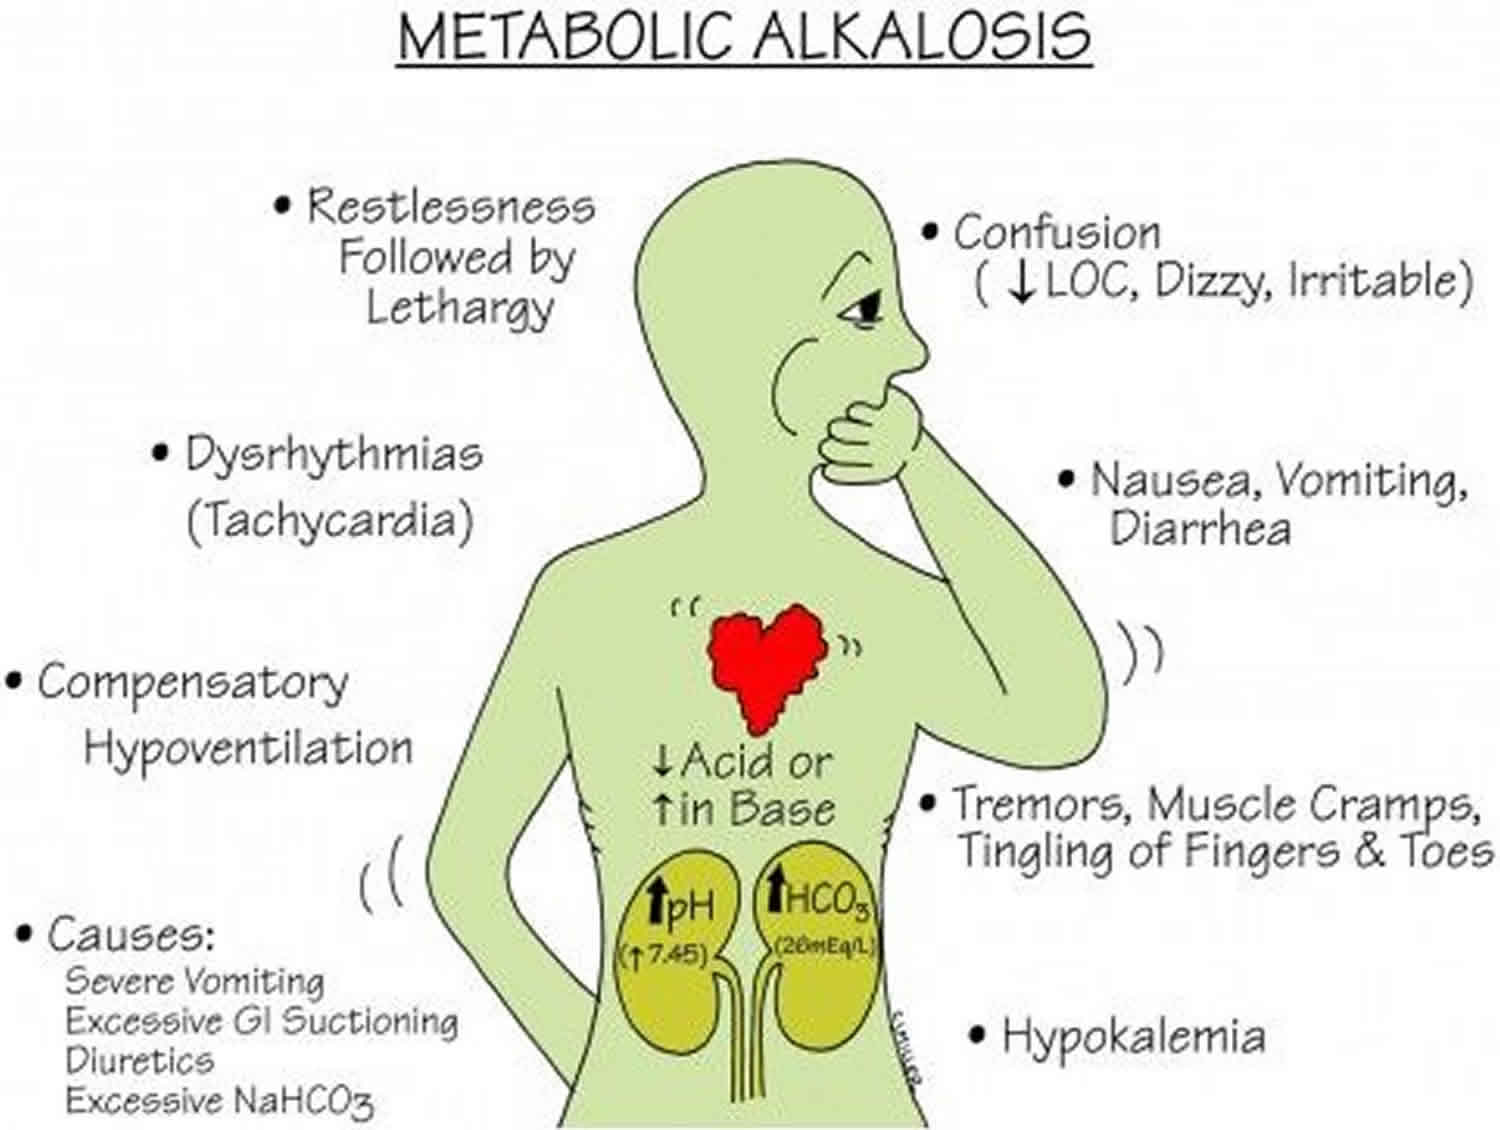 Metabolic Alkalosis Definition Causes Symptoms Diagnosis Treatment Prognosis